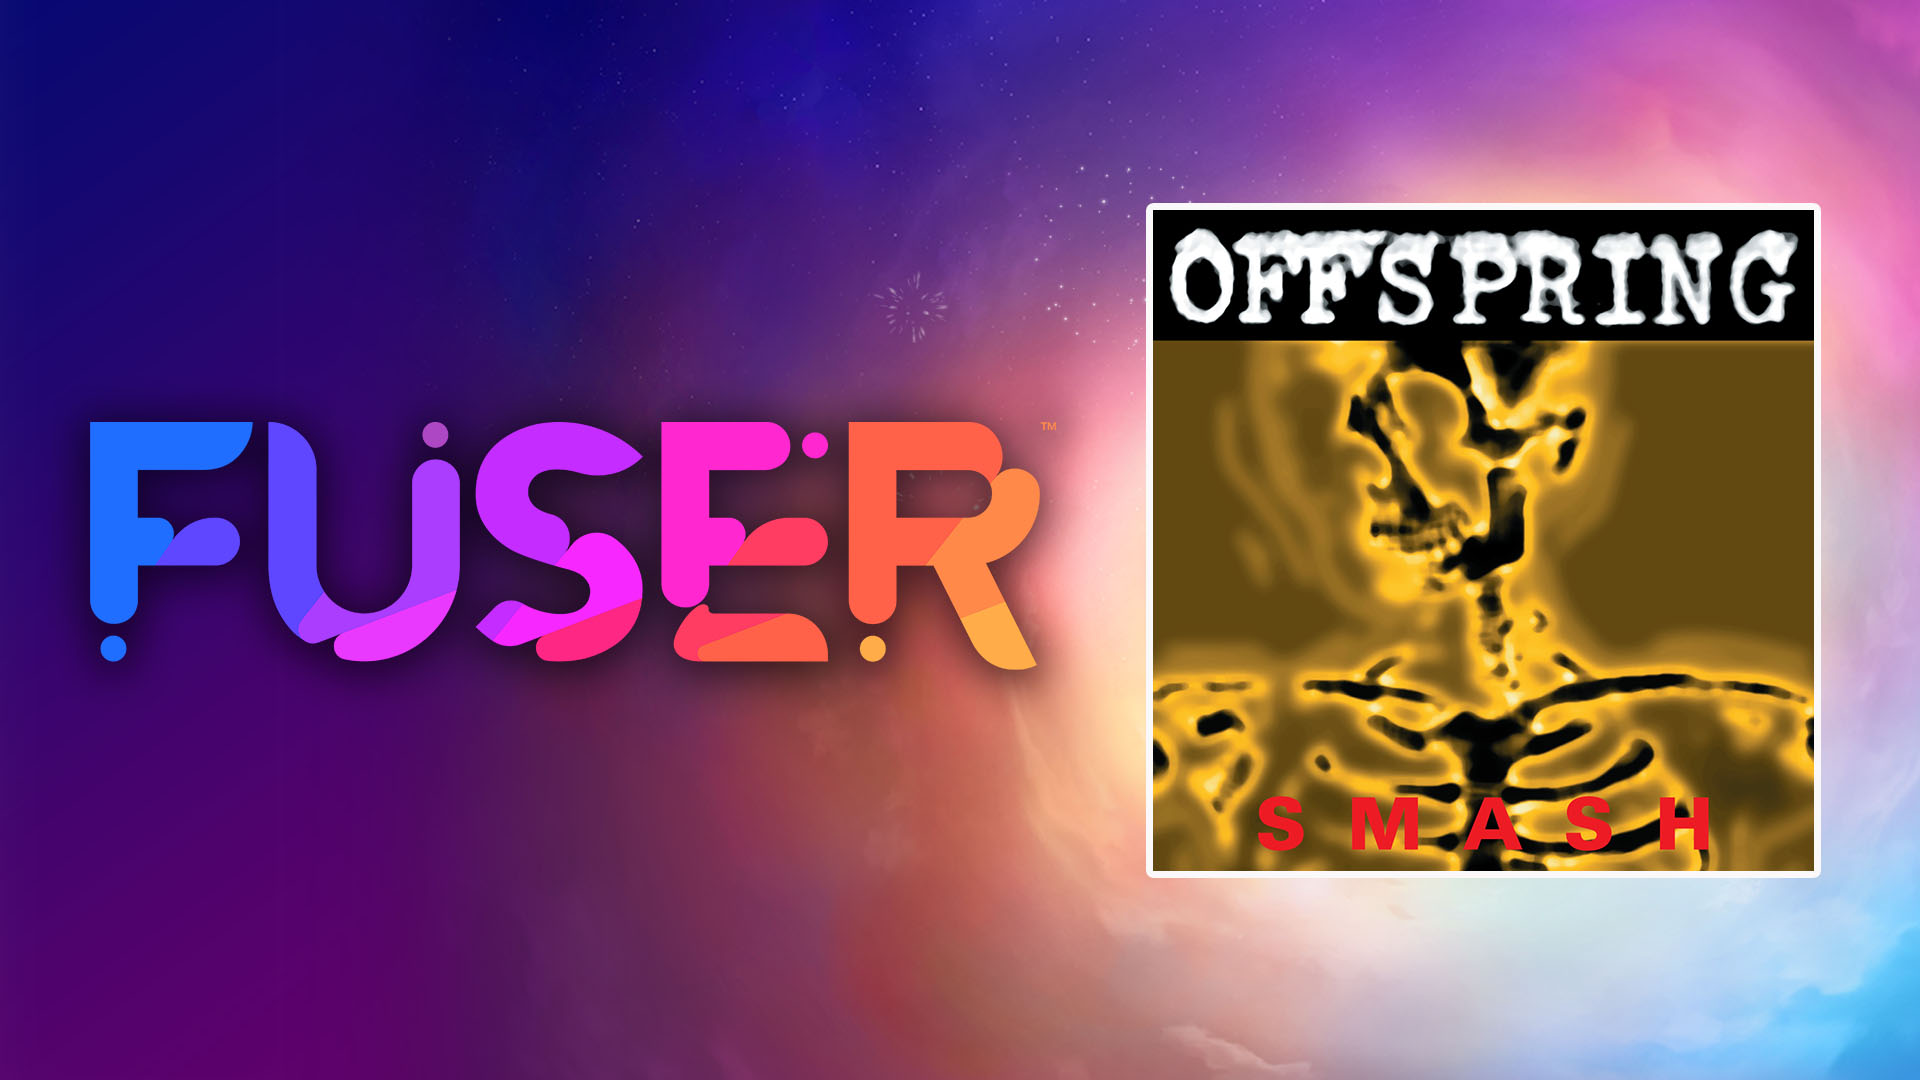 The Offspring - "Self Esteem"